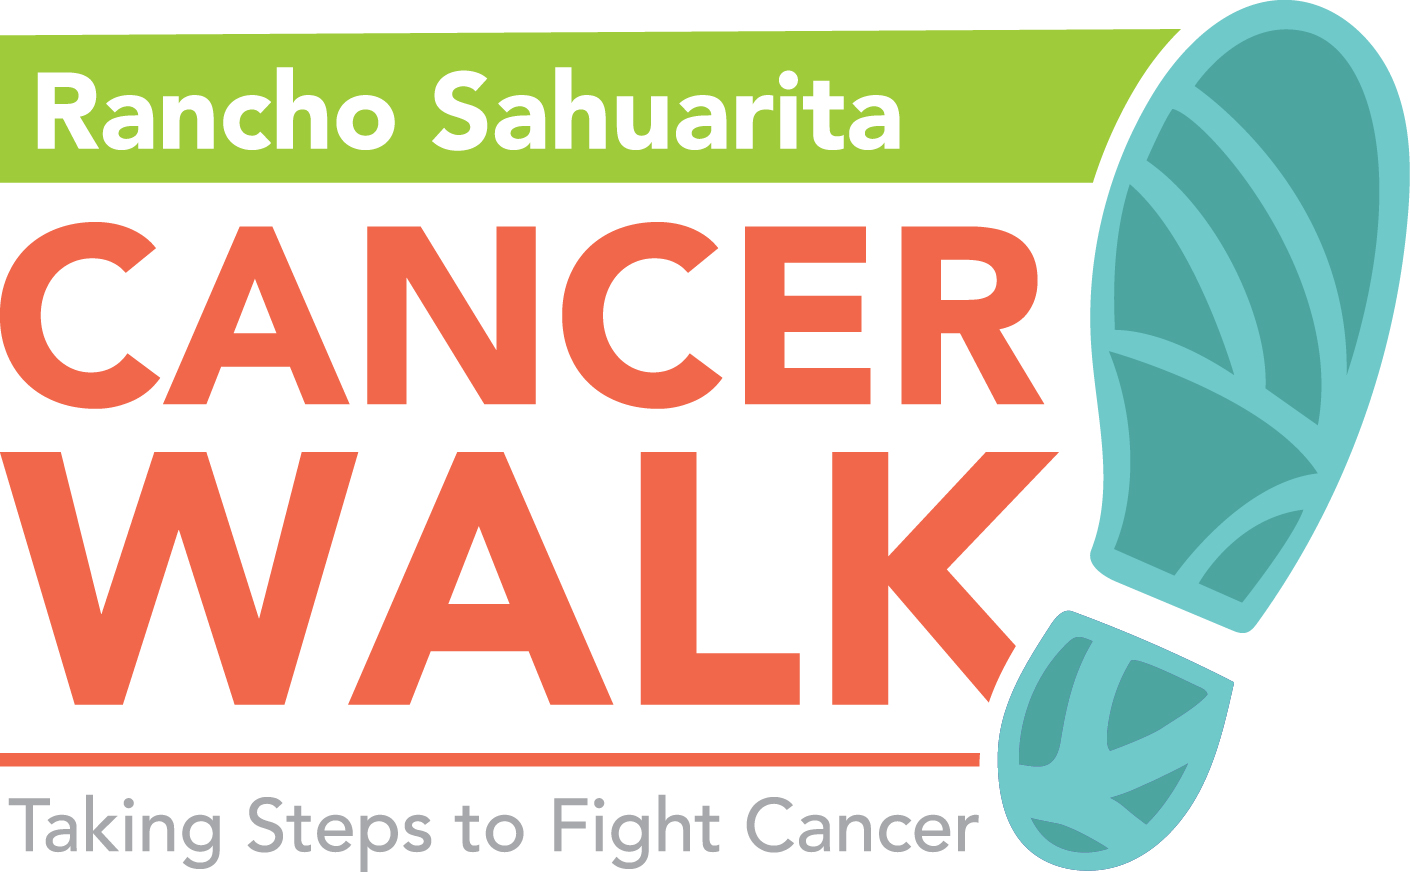 Rancho Sahuarita Cancer Walk March 30th - Register Today! - Graphic design